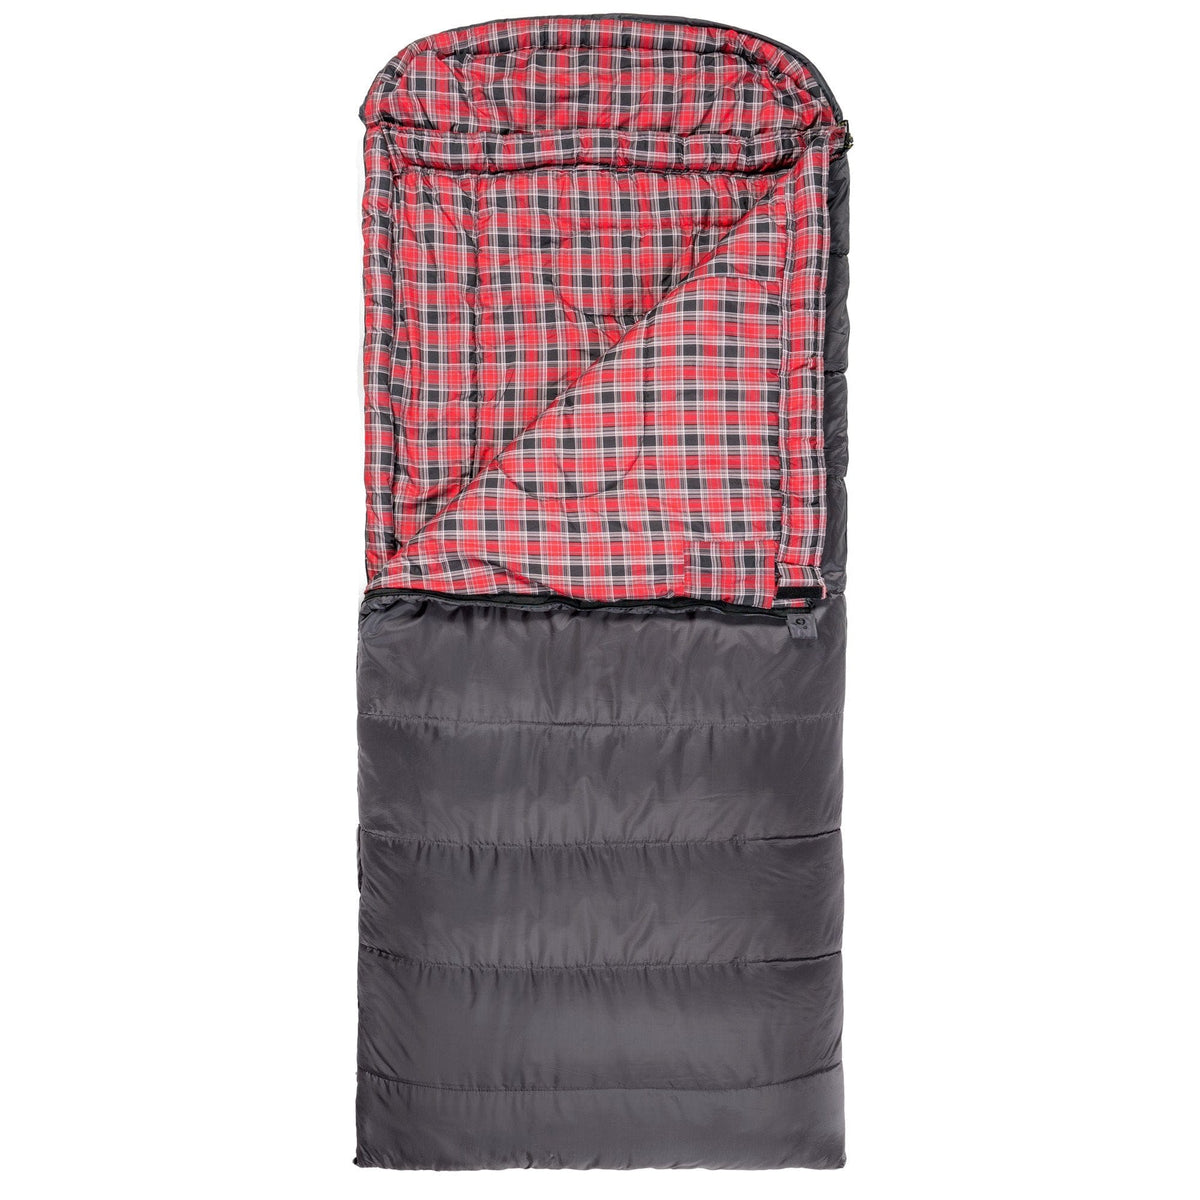 TETON Sports Celsius XL -25˚F Sleeping Bag Right Zipper / Grey 139R